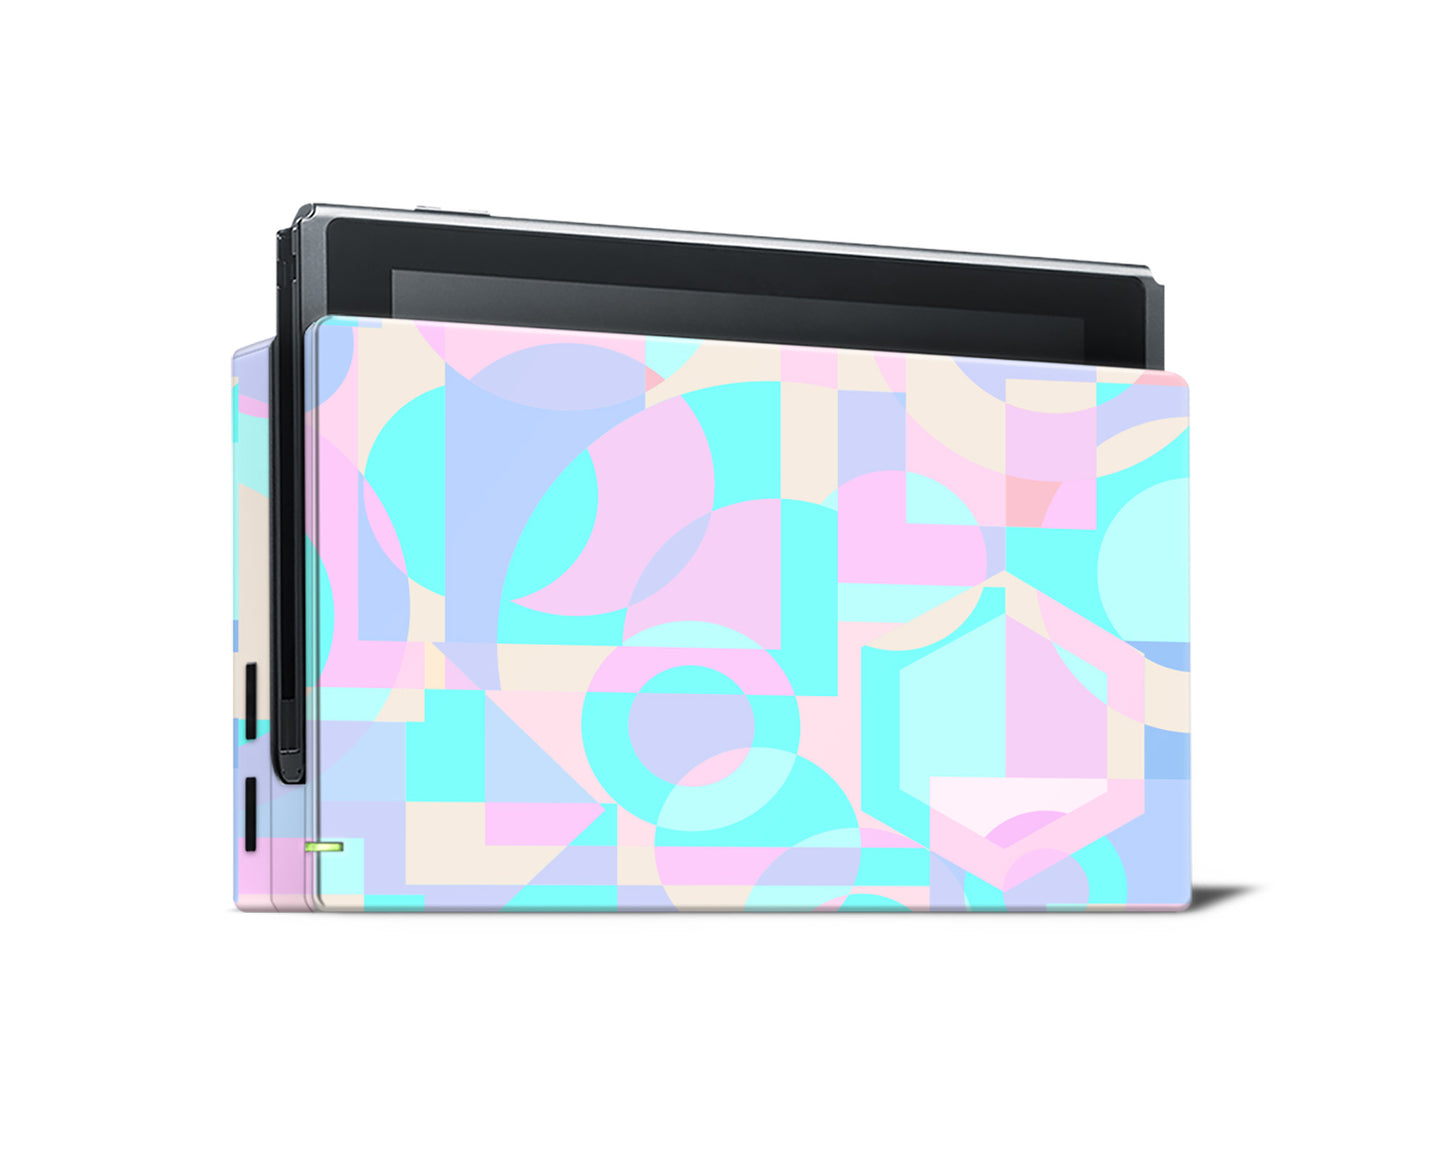 Pastel Geometric Shapes Full Wrap Vinyl Skin for Nintendo Switch